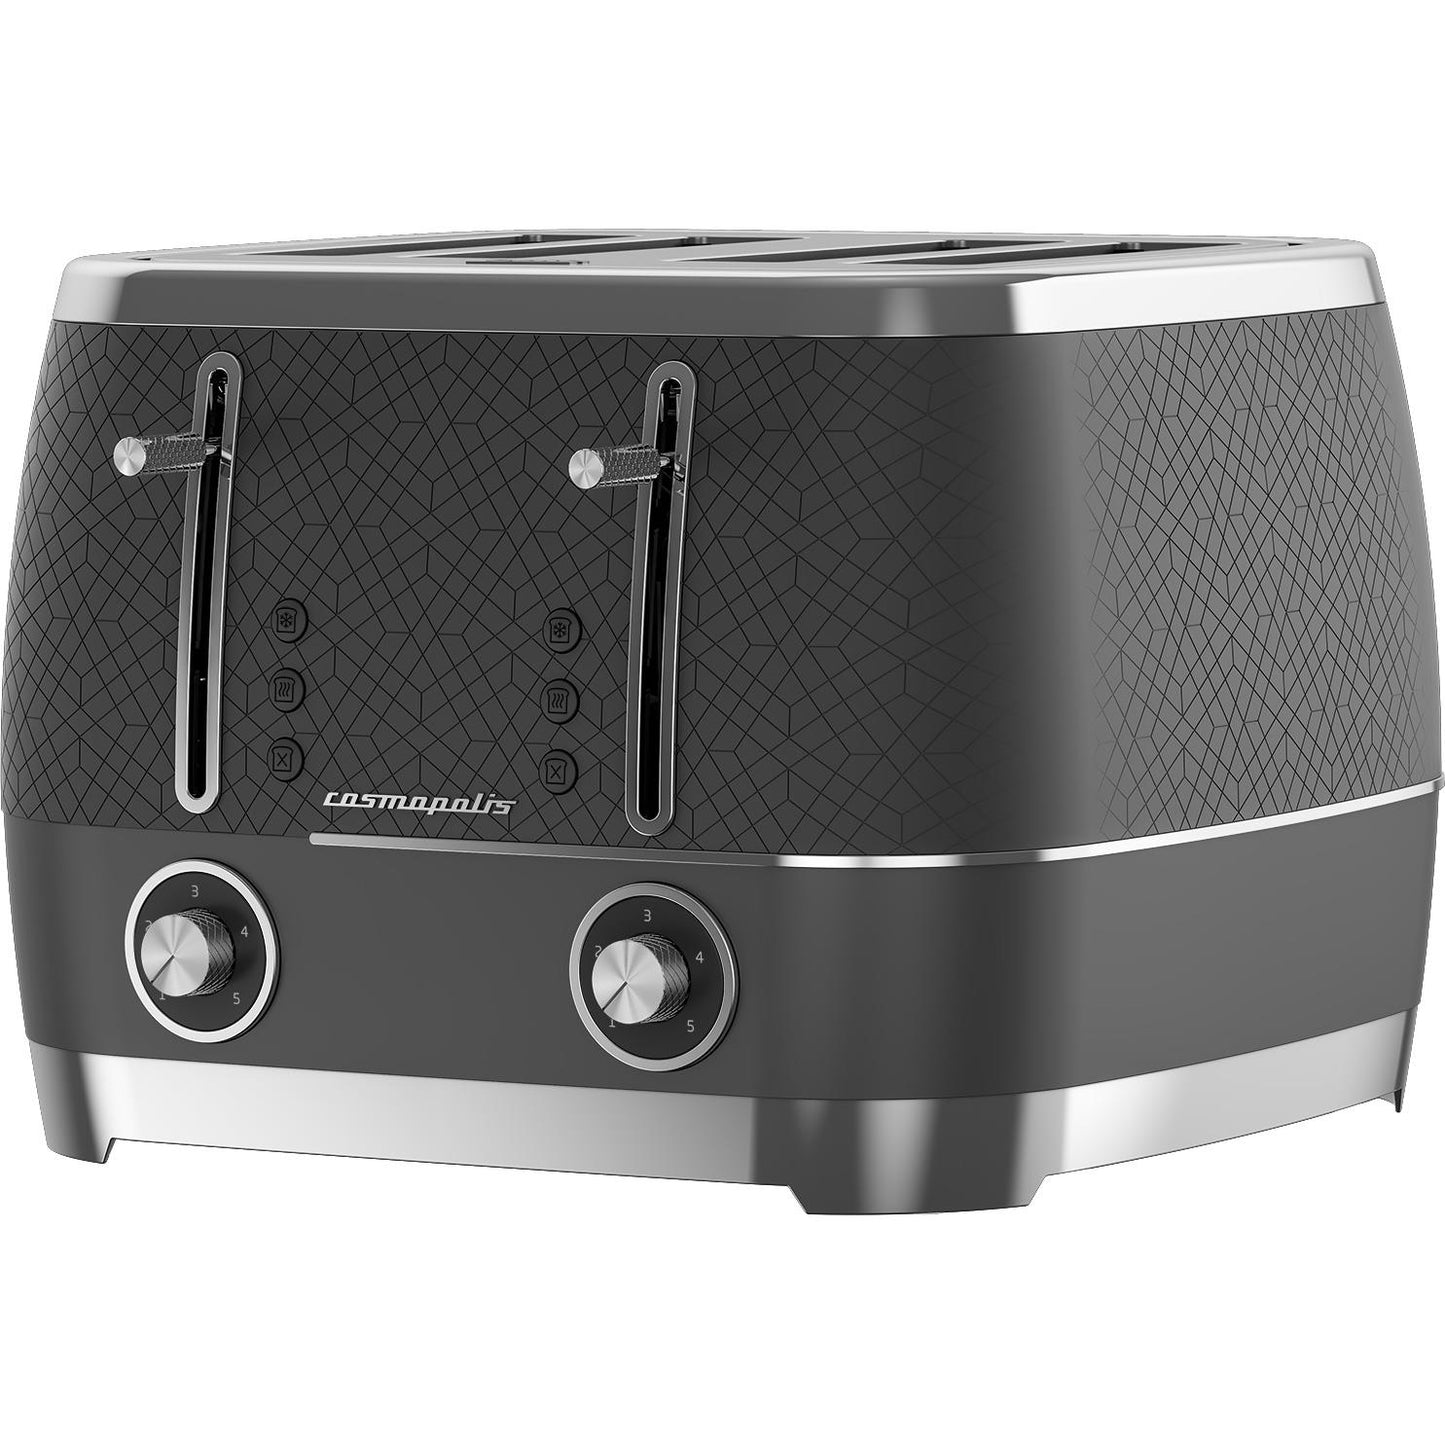 Beko Cosmopolis Retro Matte Granite Grey & Chrome 4 Slice Toaster